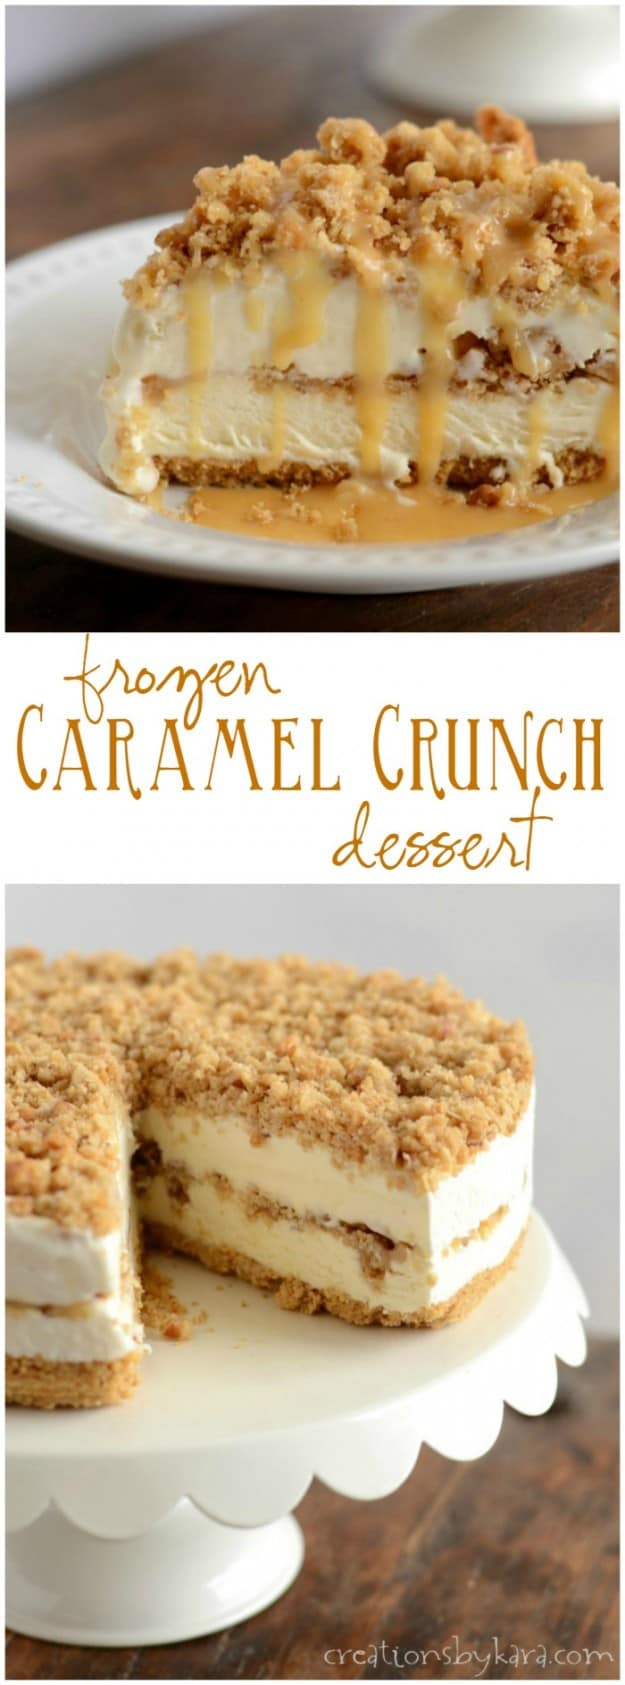 frozen caramel crunch dessert pinterest collage